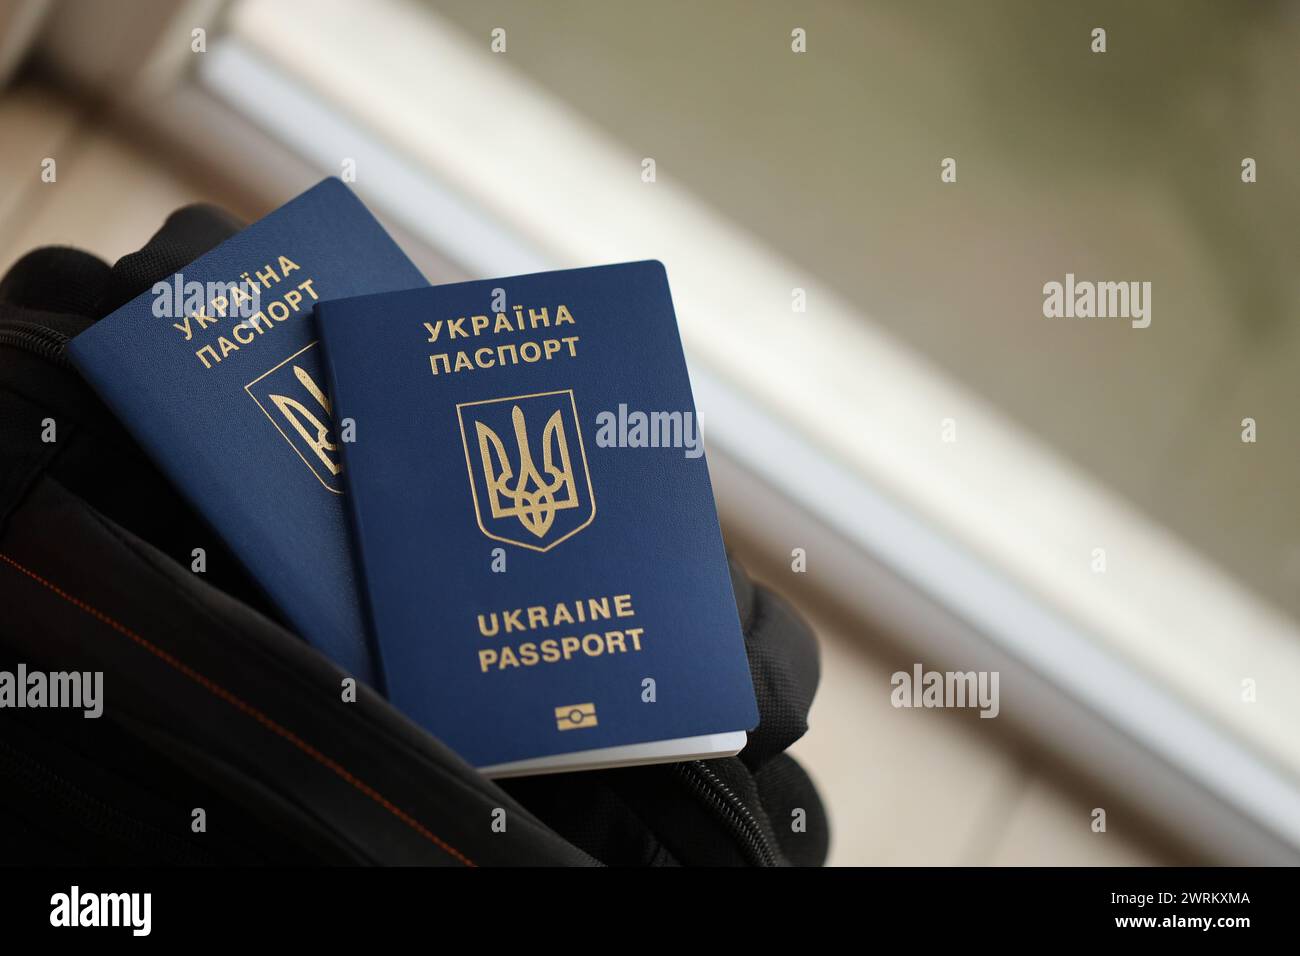 Two ukrainian biometrical passports on black touristic backpack close up Stock Photo